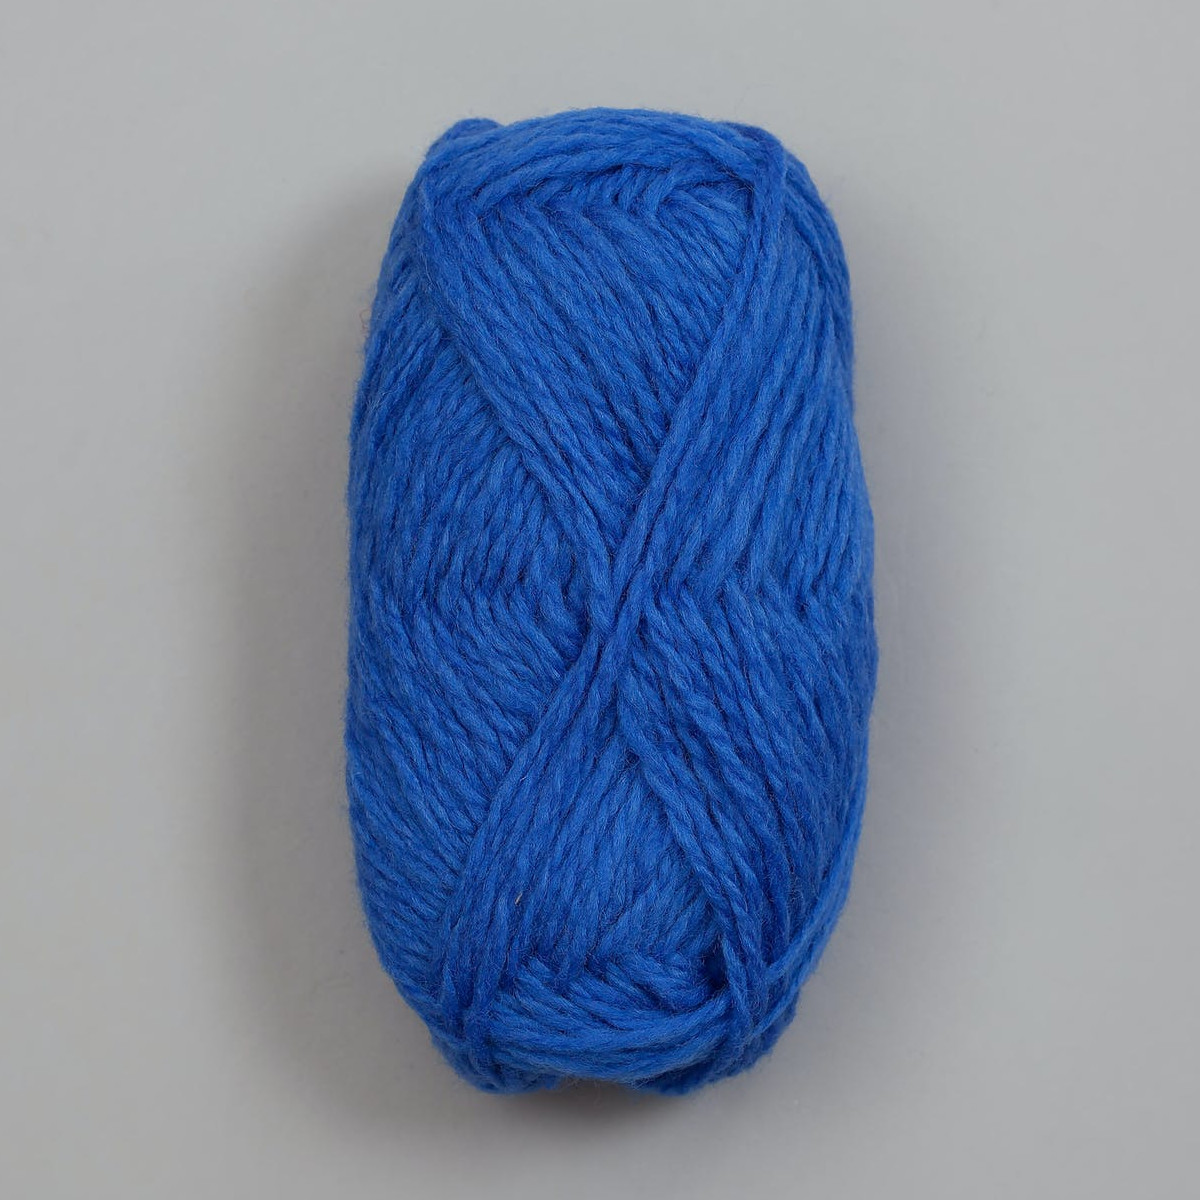 Vams - Blå / Blau (37)